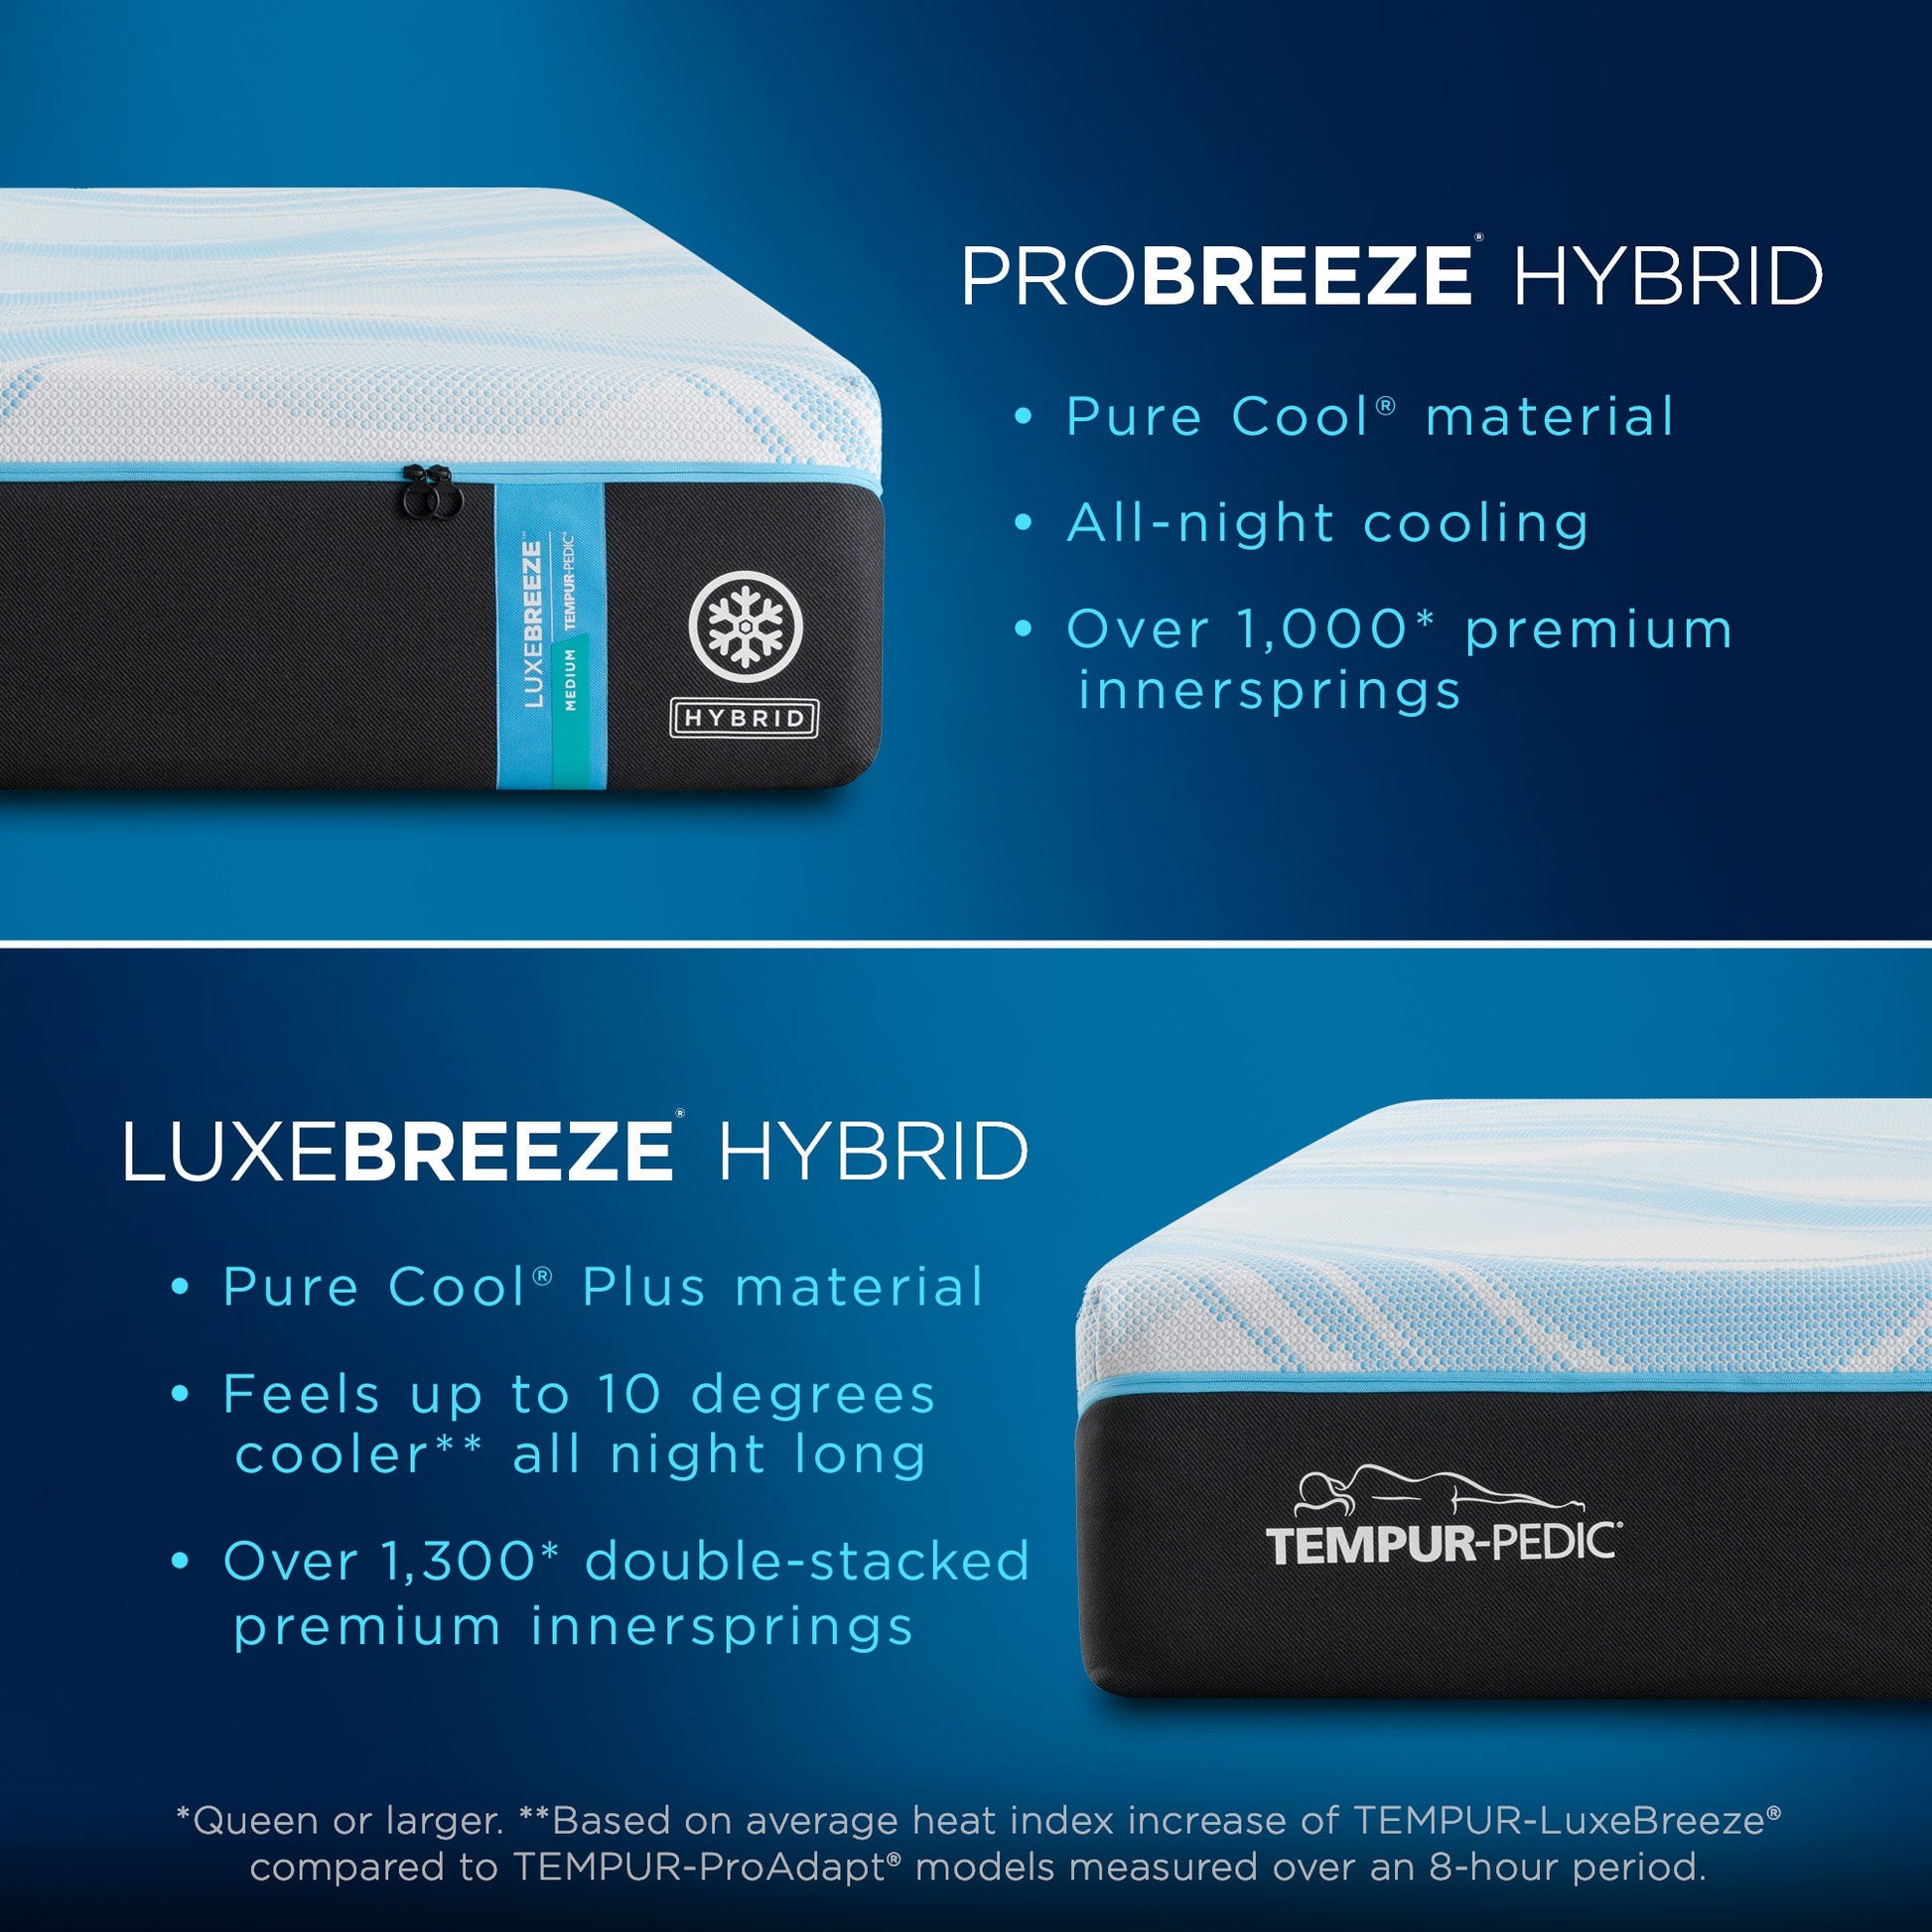 Tempur-Pedic Tempur-LuxeBreeze 2.0 Medium Hybrid Mattress vs ProBreeze Hybrid features